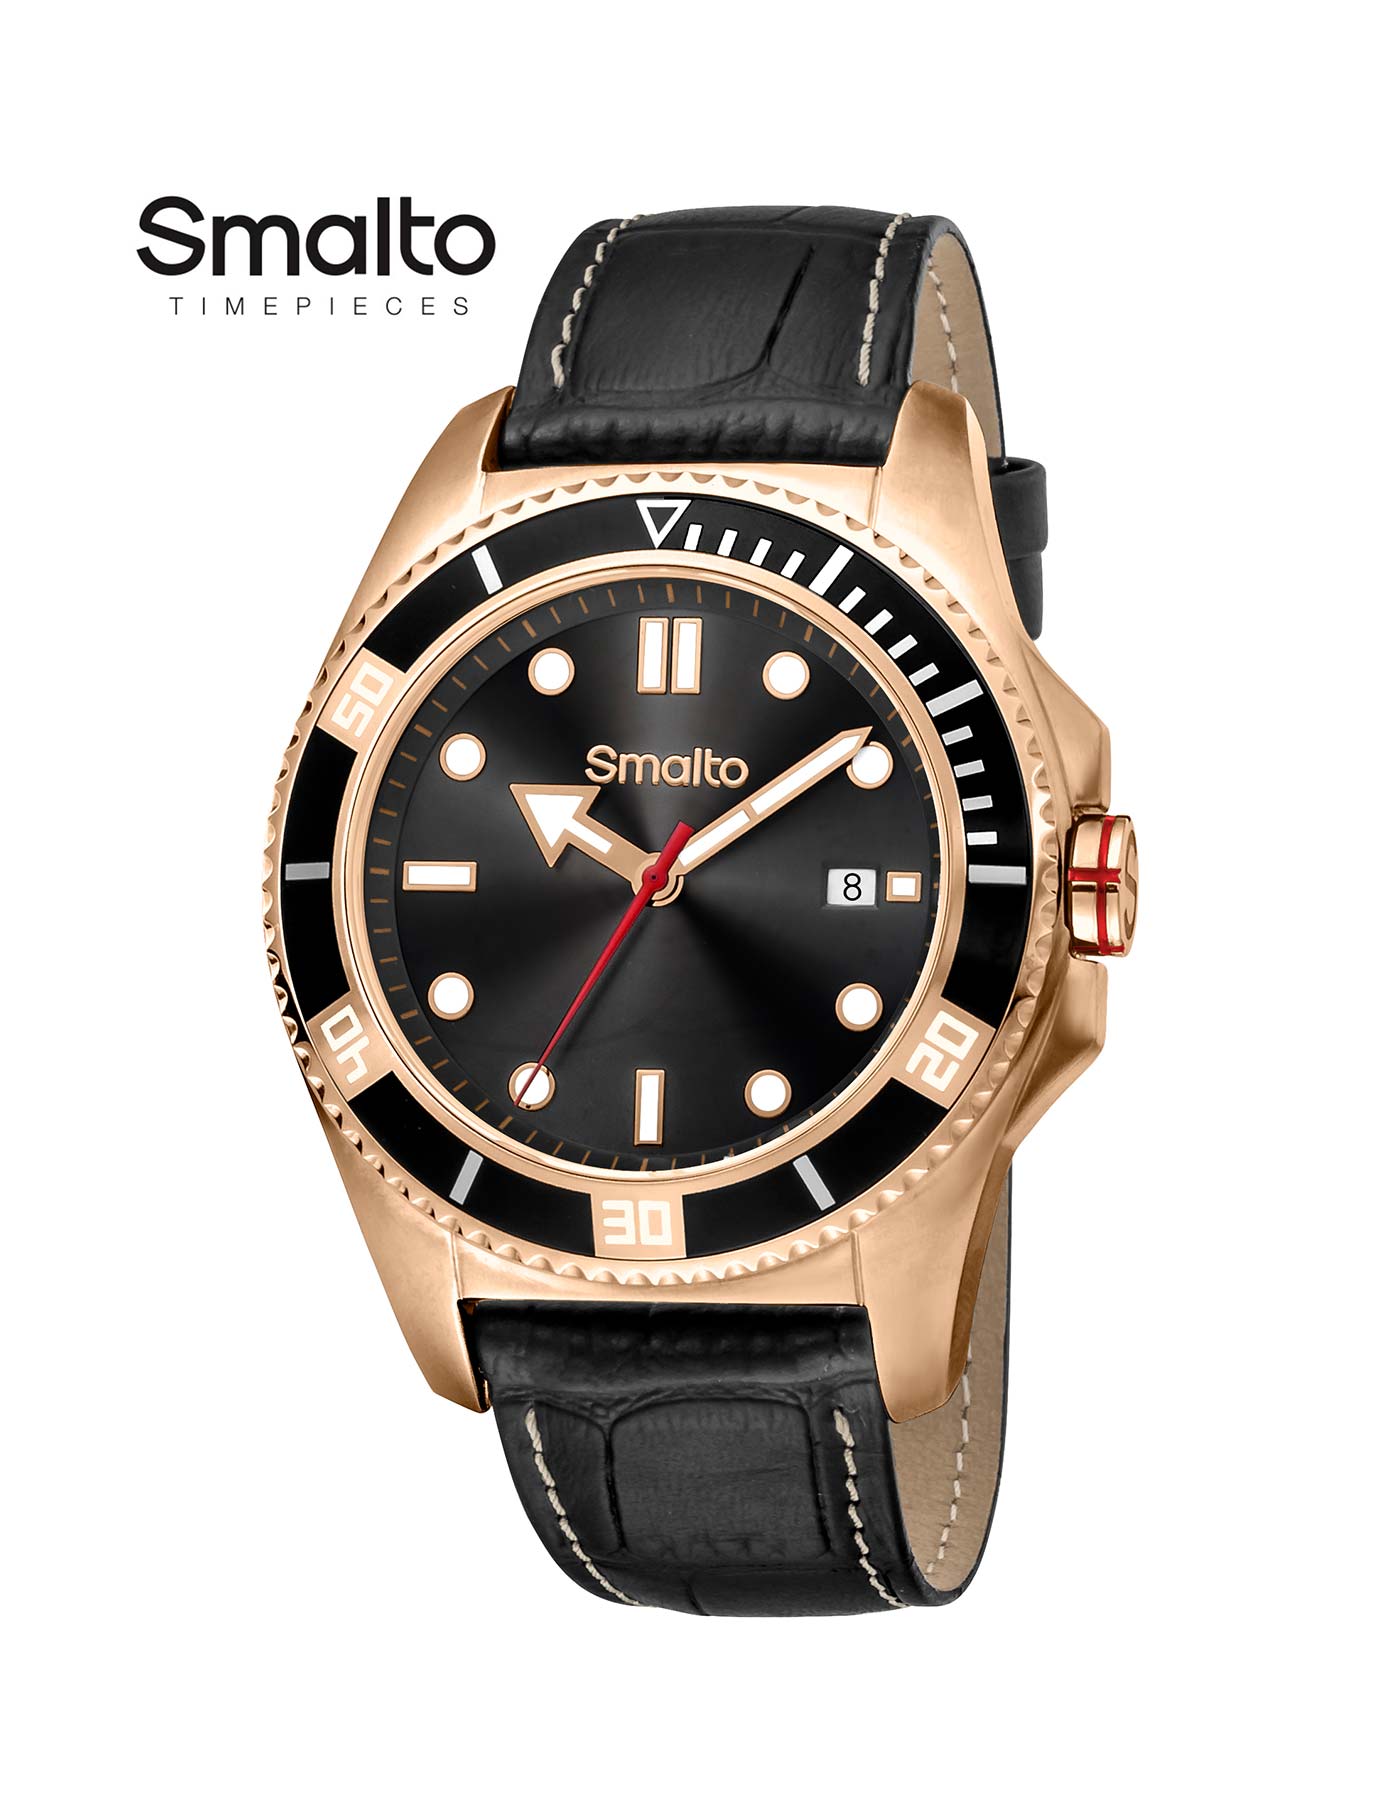 Smalto watch - Phil Design studio - Design industriel